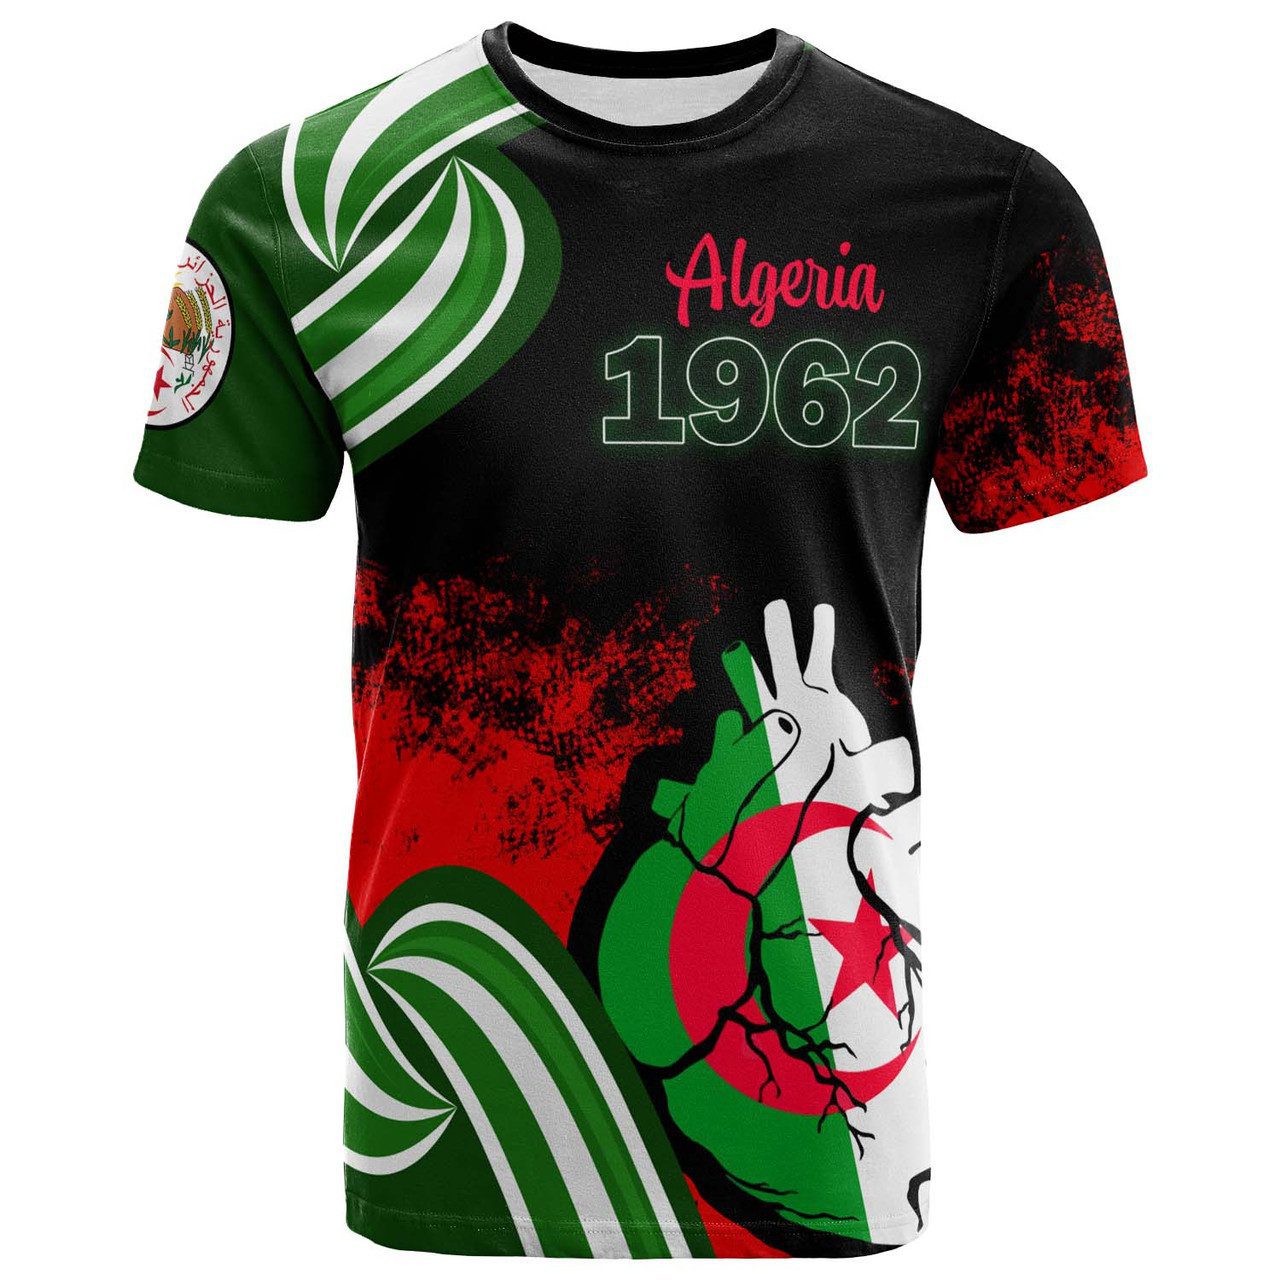 Algeria T-shirt – Algeria Independence Day 1962 Algeria In My Heart T-shirt